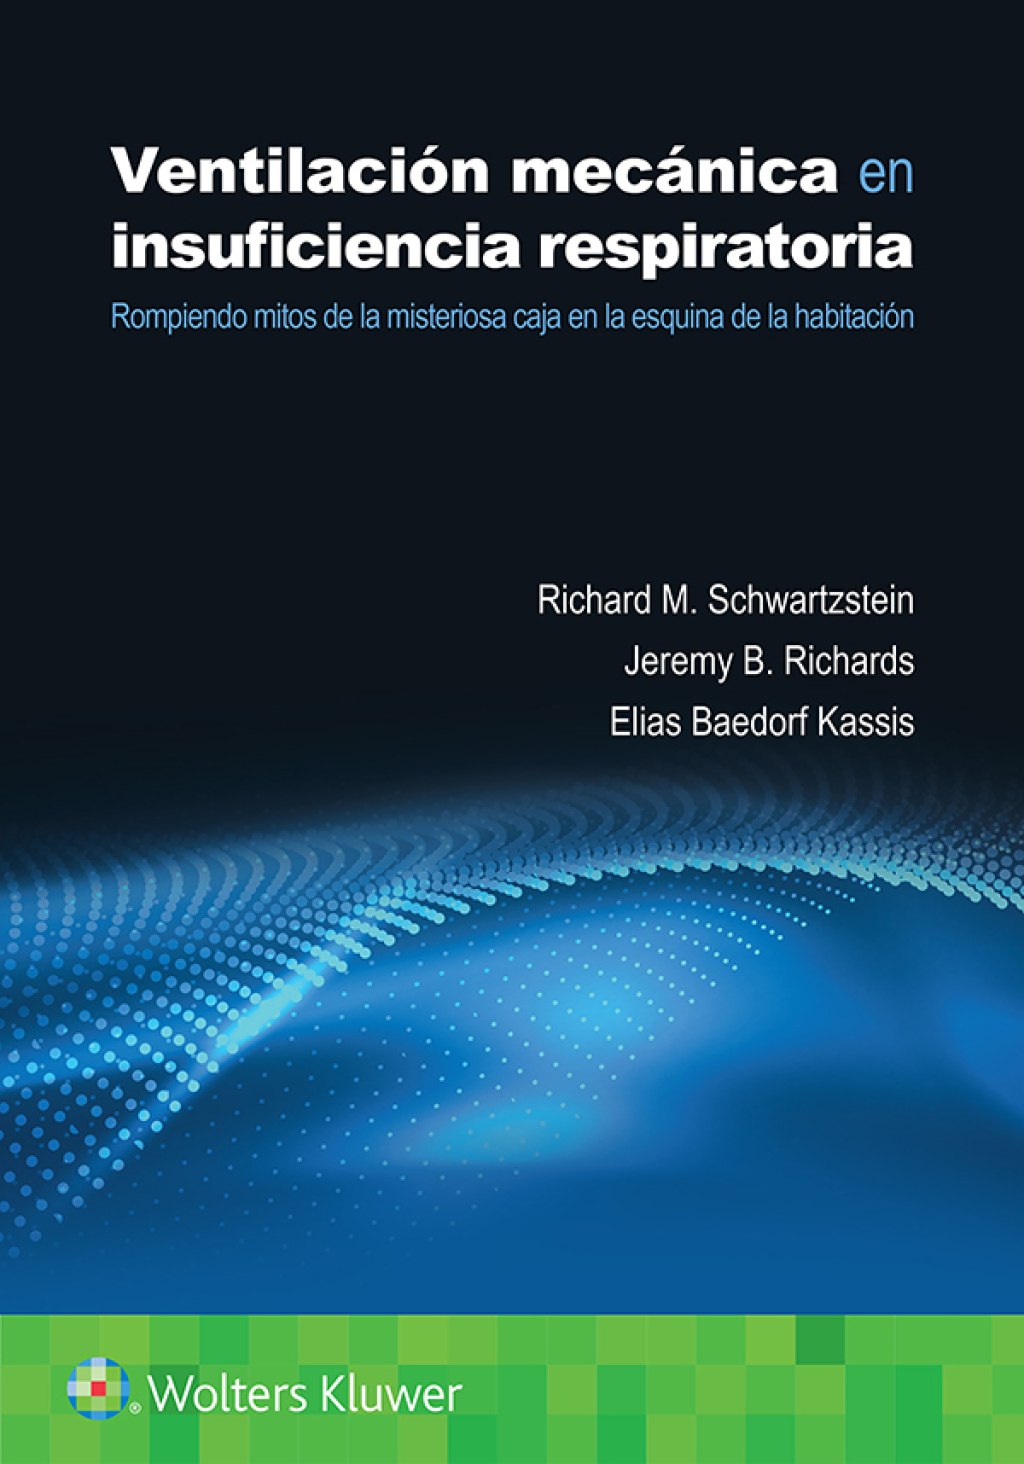 ISBN 9788410022096 product image for VentilaciÃ³n mecÃ¡nica en insuficiencia respiratoria - 1st Edition (eBook) | upcitemdb.com